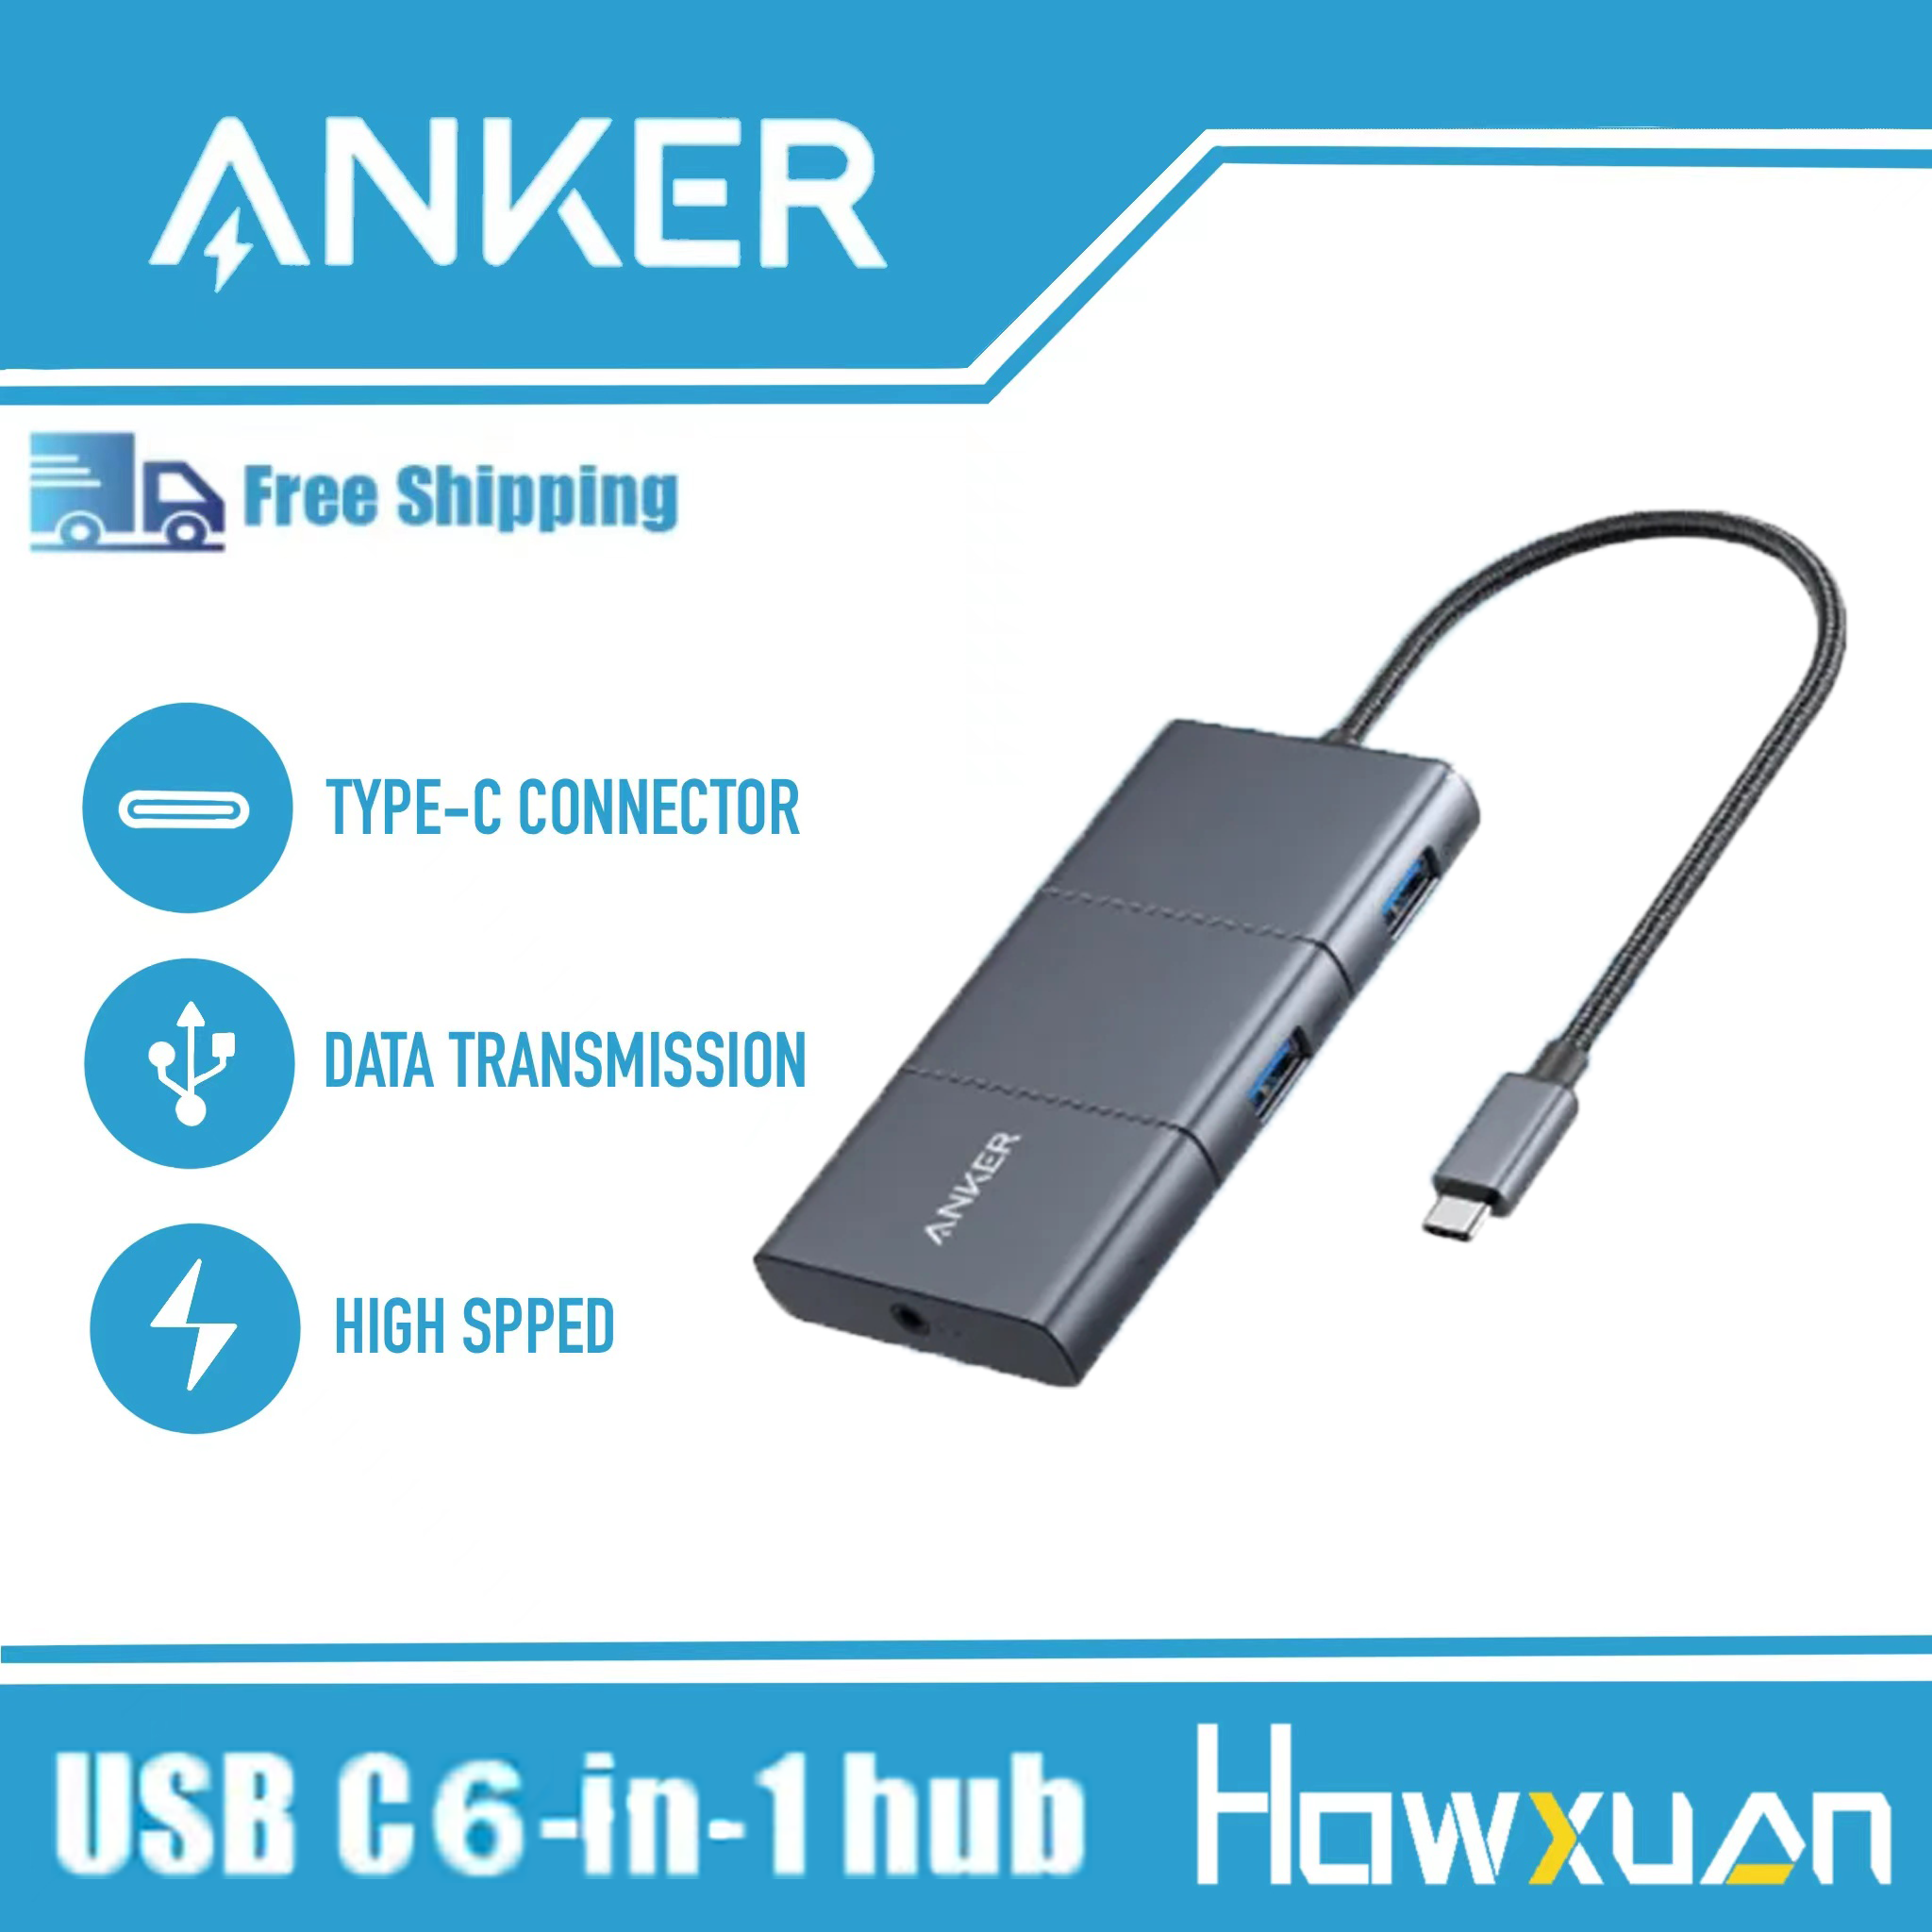 Anker USB C Hub, PowerExpand 6-in-1 USB C Hub Adapter